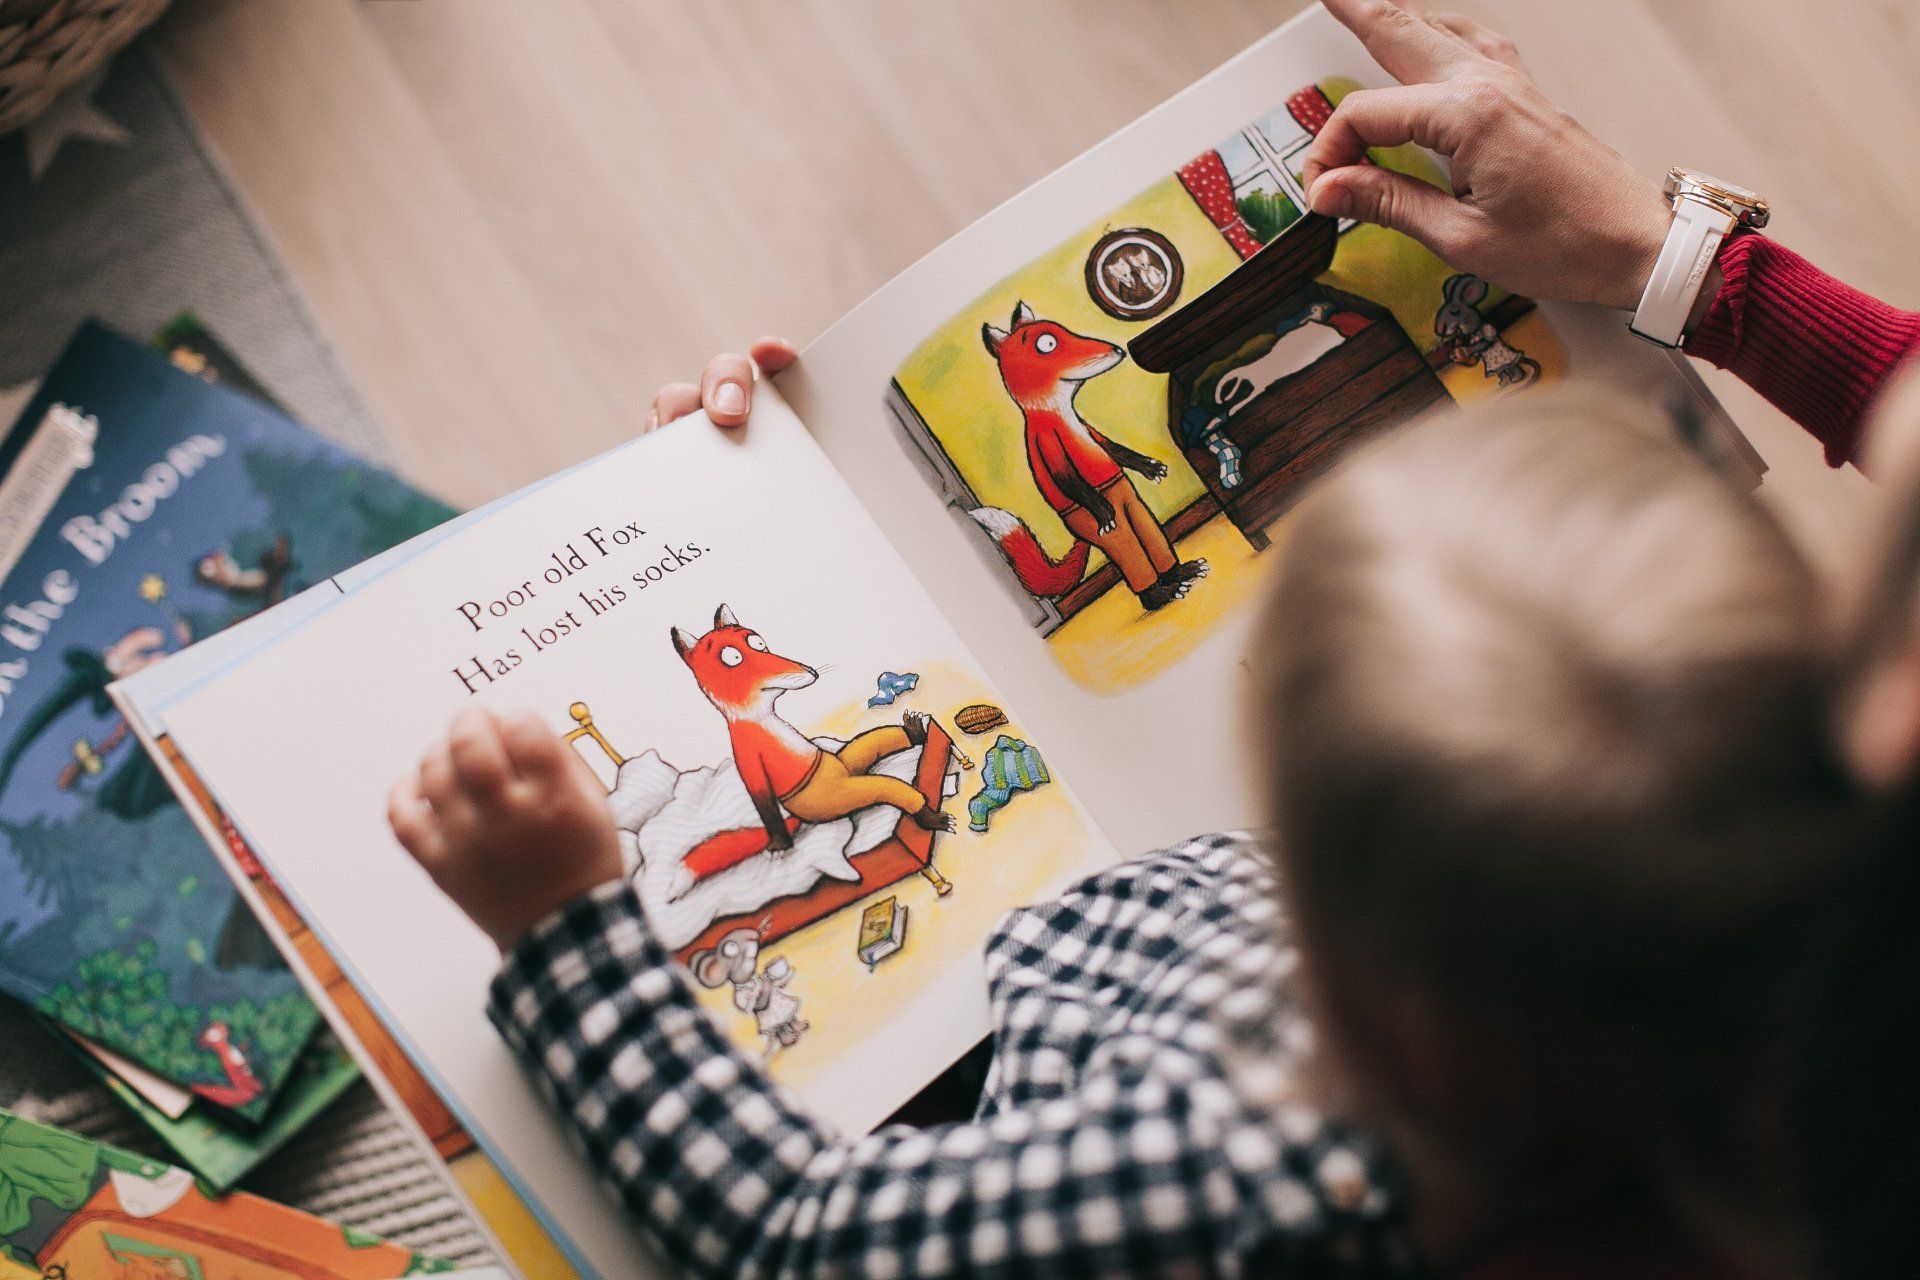 Nebraska Childcare. Child reading a book